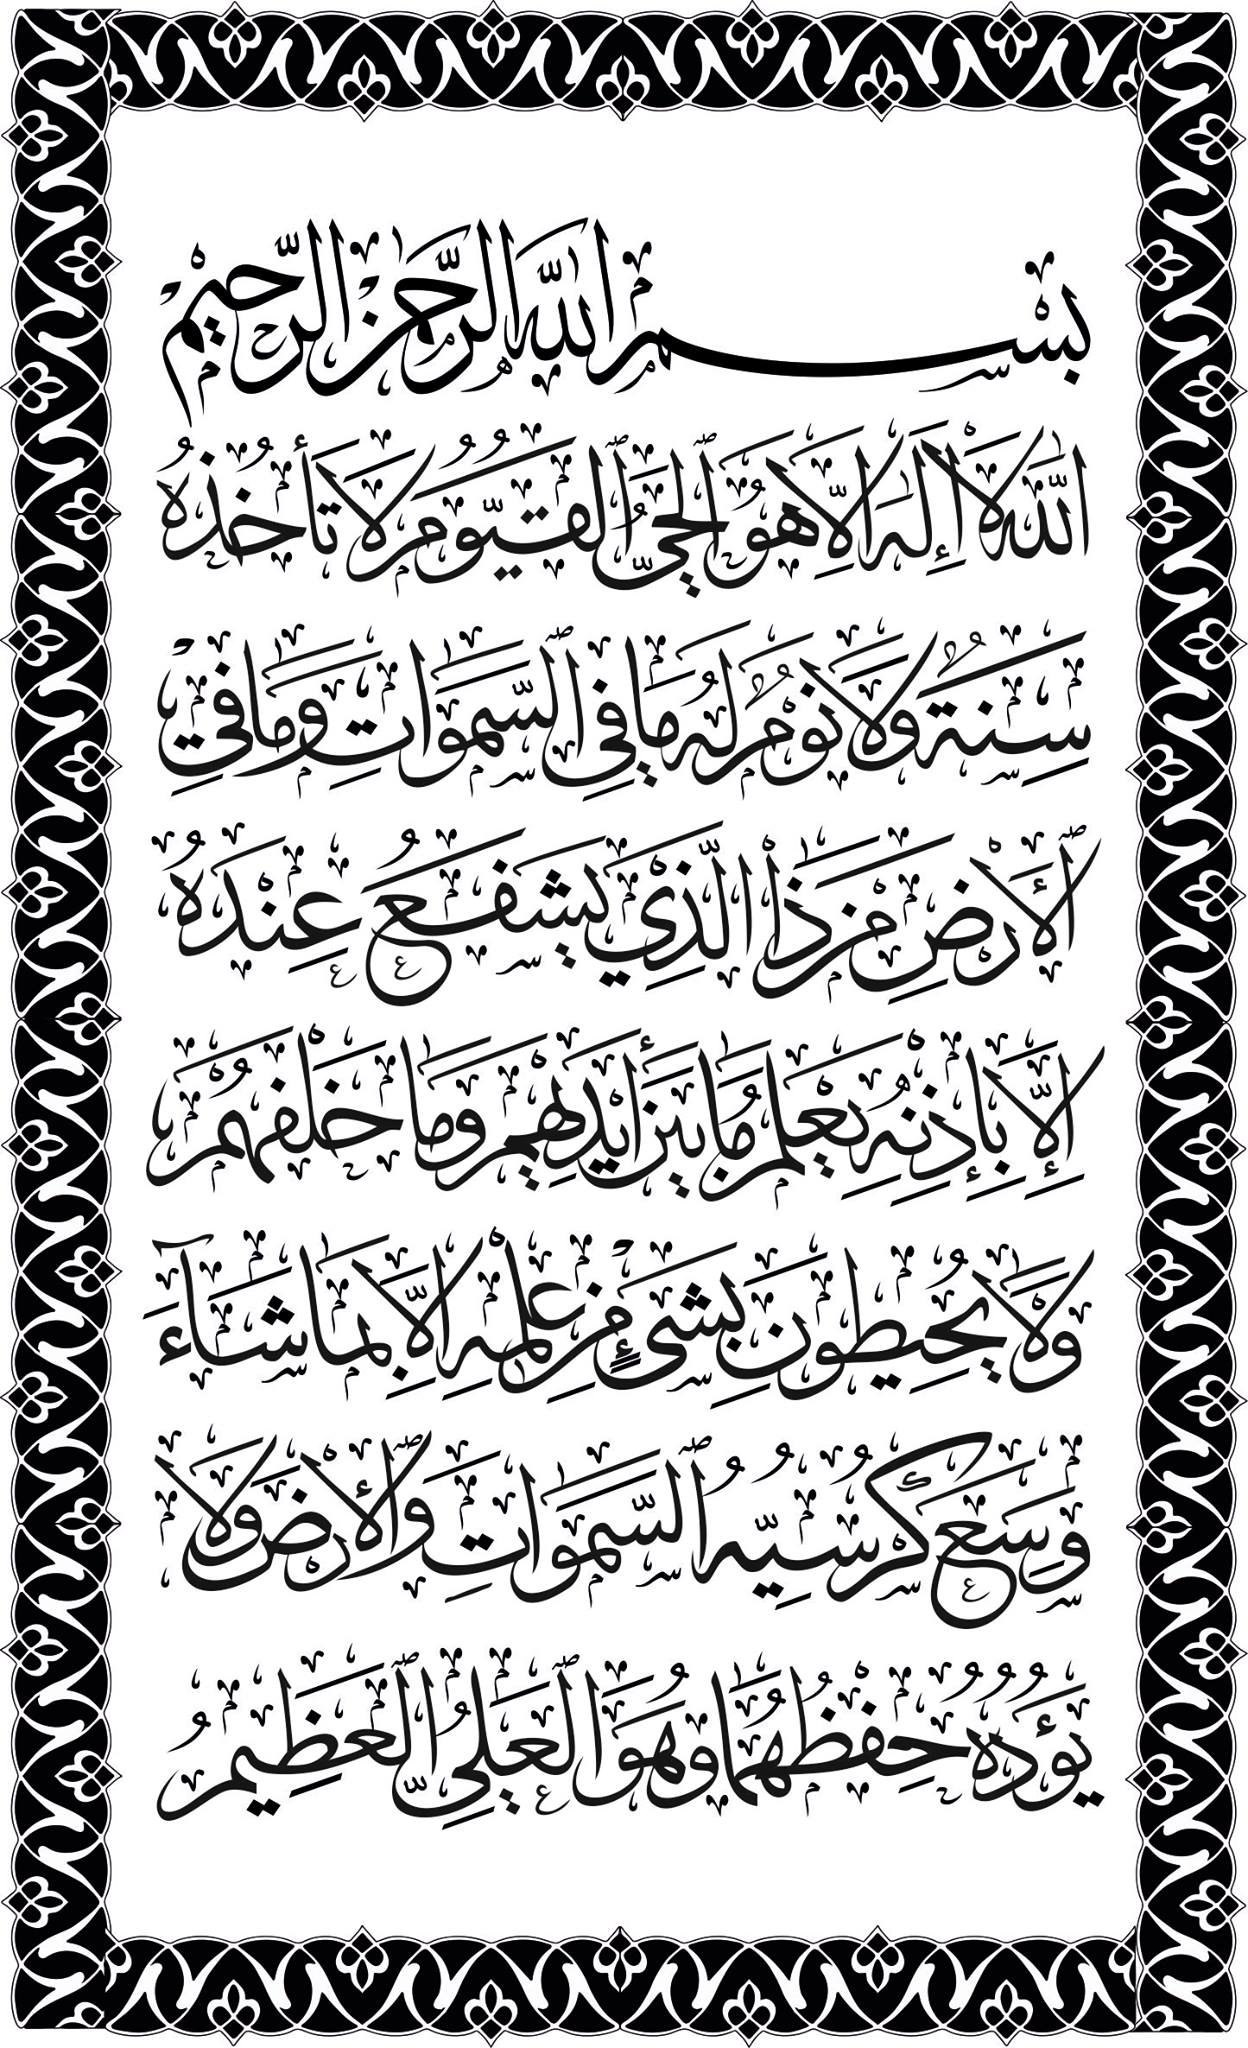 Download Arabic Calligraphy Muslim Islamic Art Vector jpg Image ...